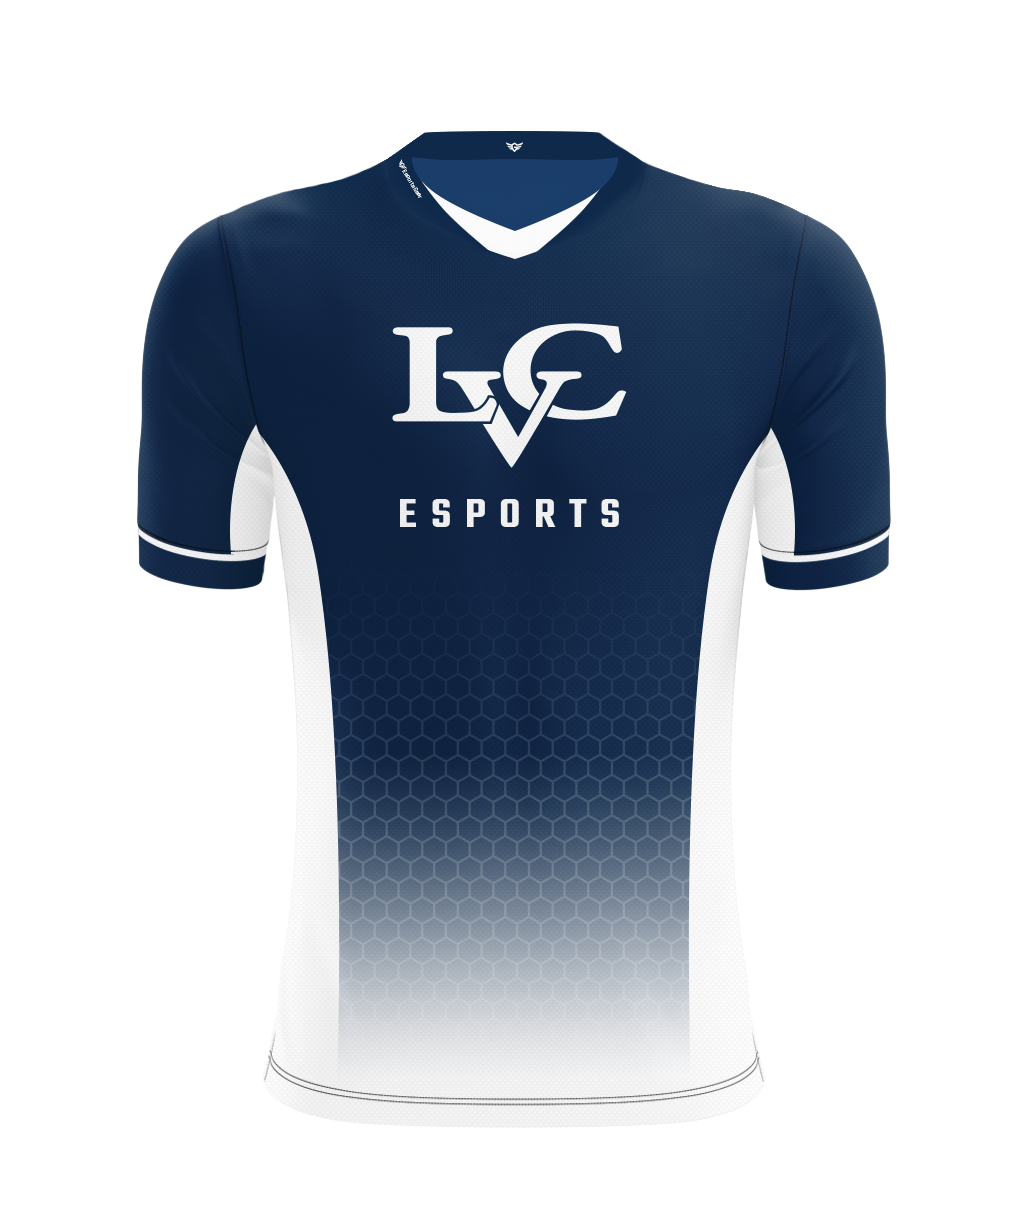 LVC Esports Jersey